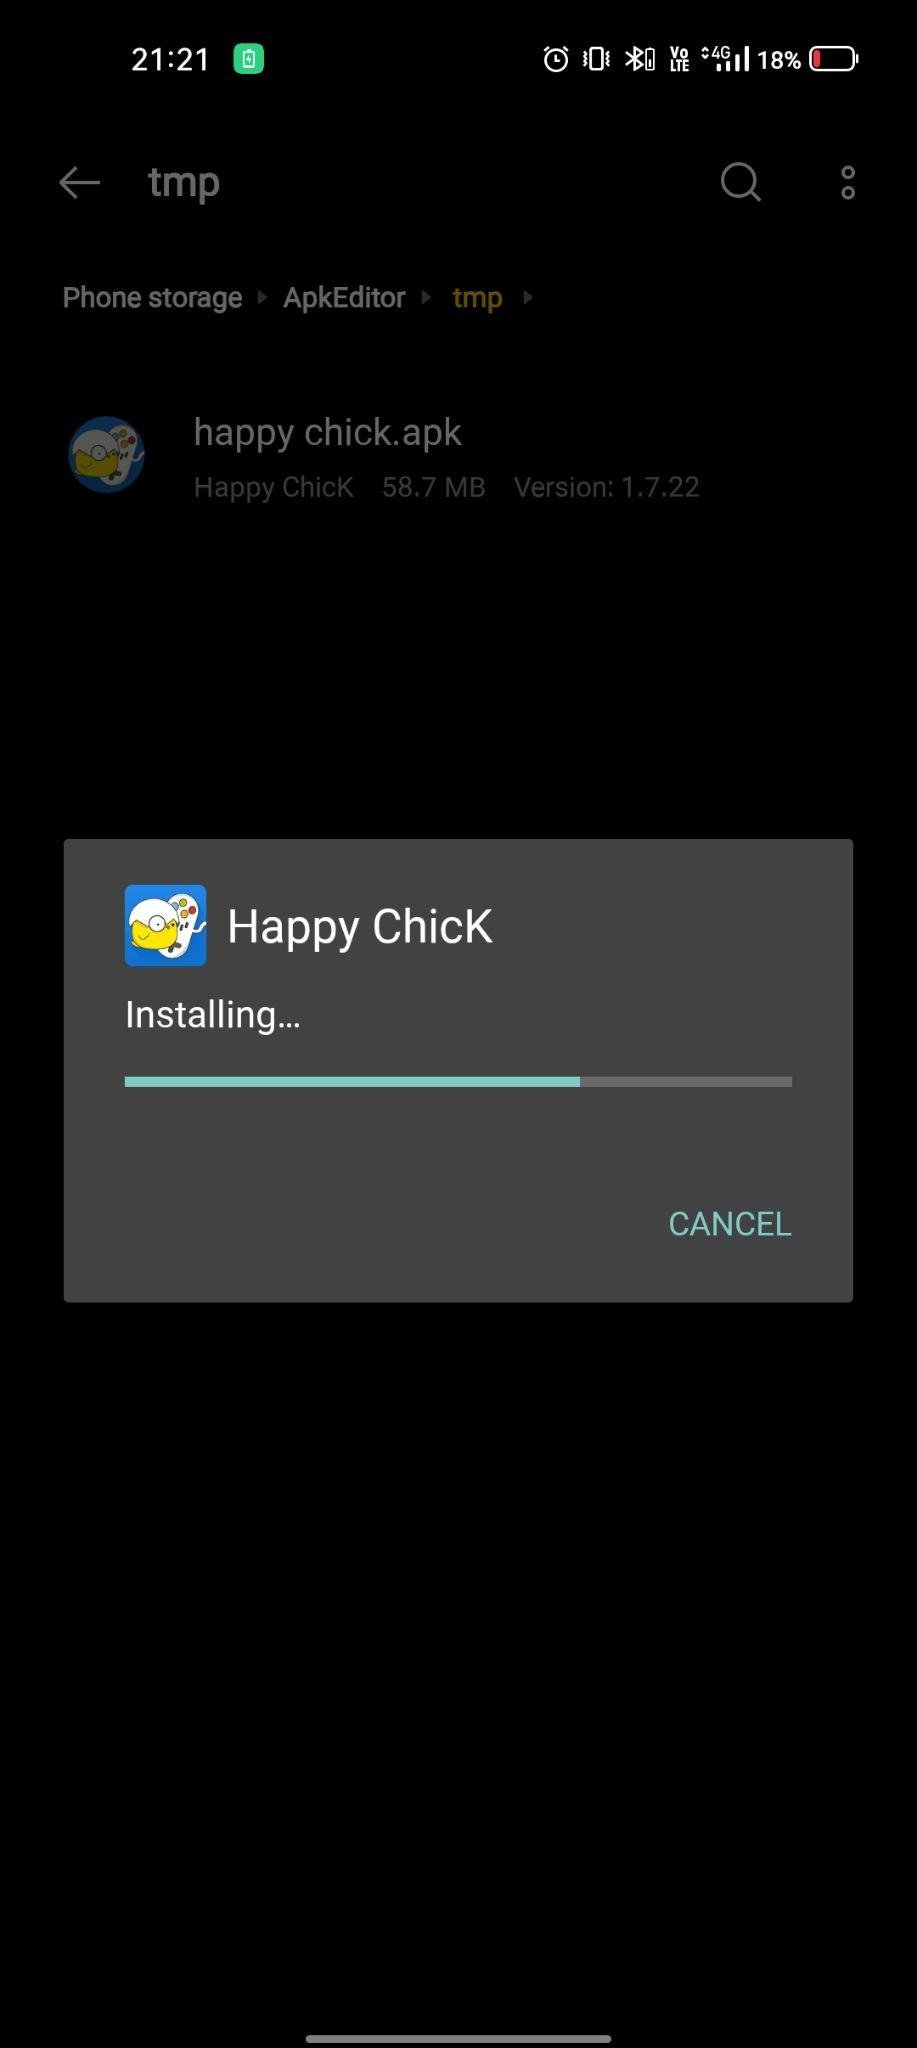 happy chick apk installing